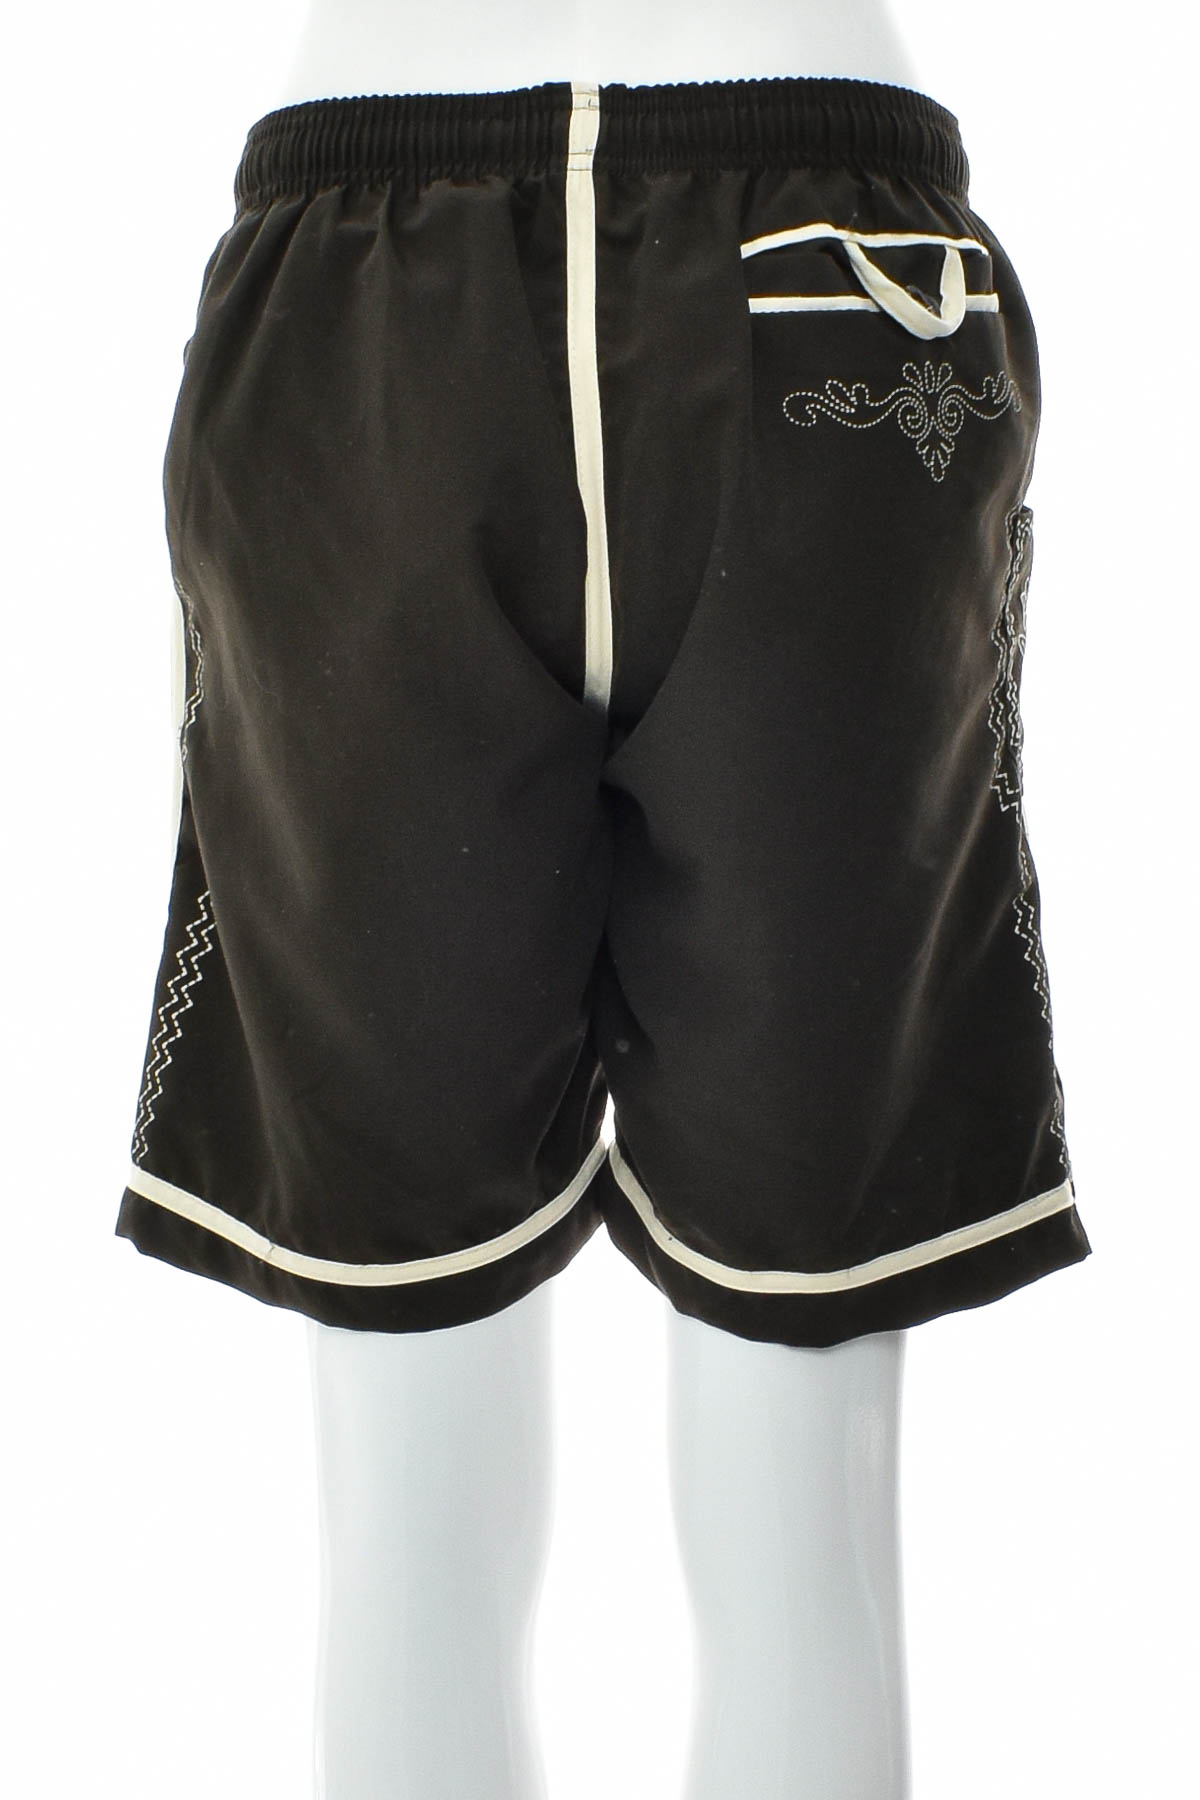 Men's shorts - ALPIN de luxe - 1